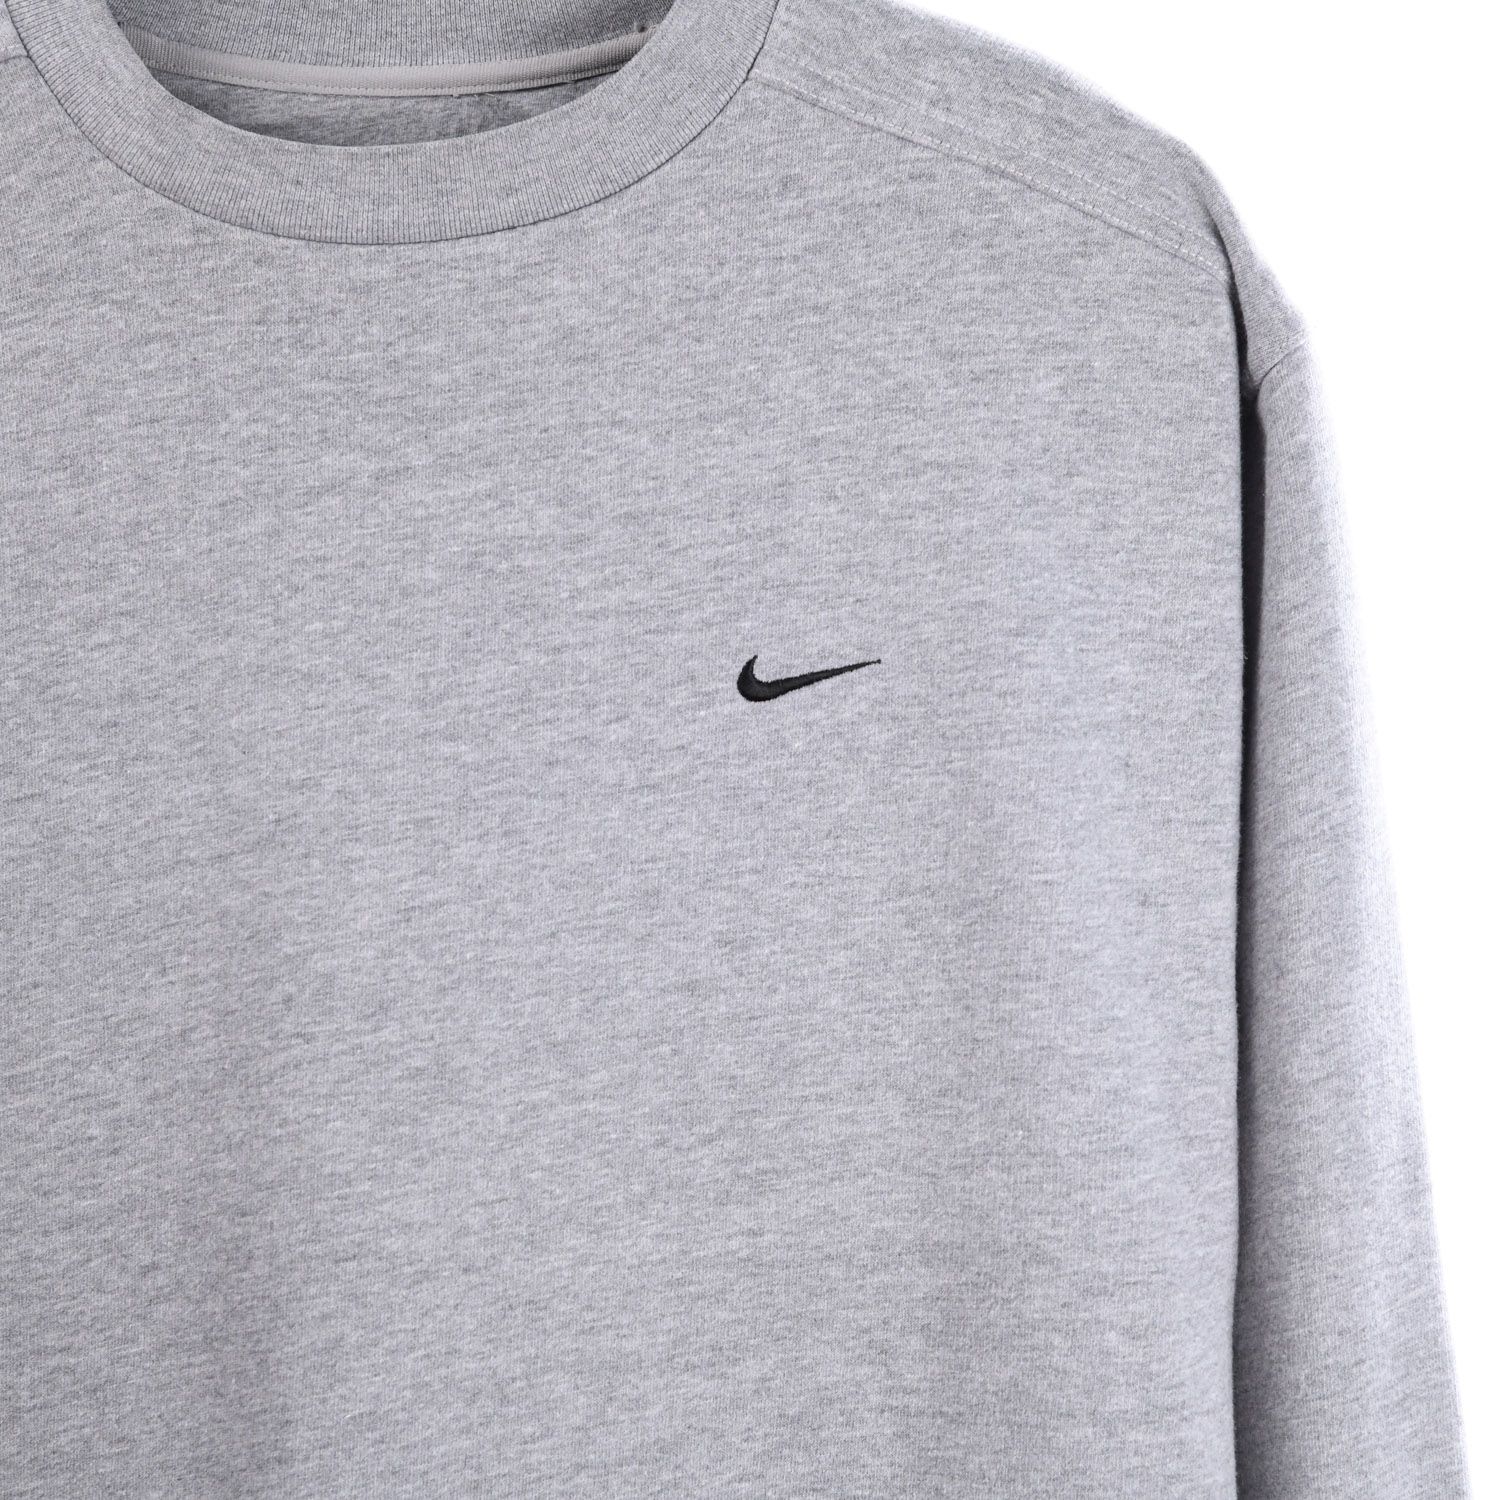 Nike Early 2000s Grey Sweatshirt With Embroidered Logo 